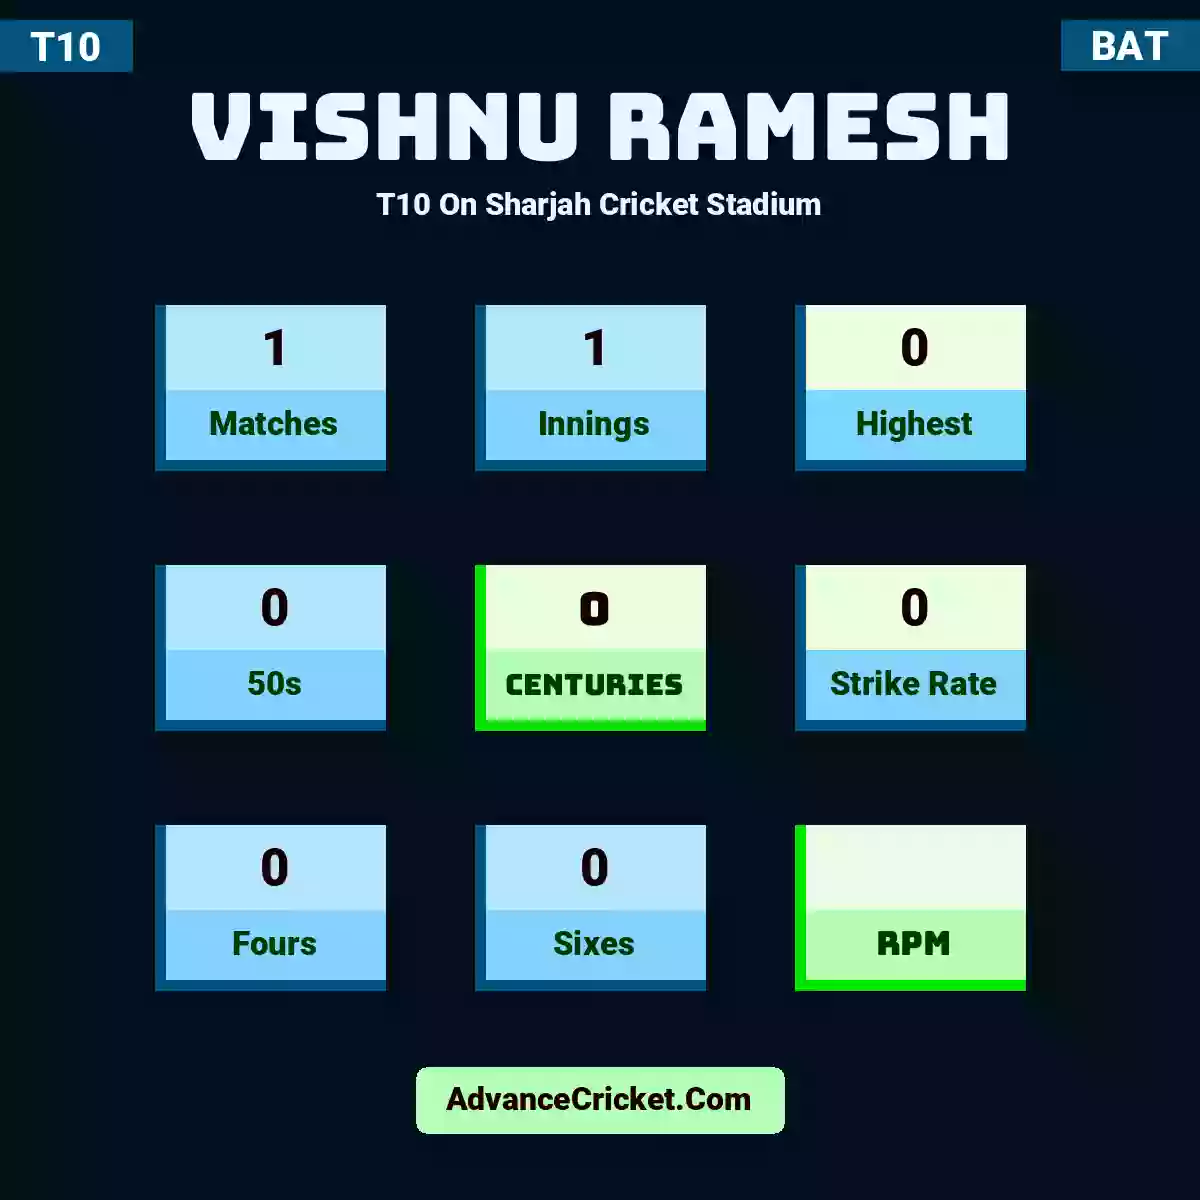 Vishnu Ramesh T10  On Sharjah Cricket Stadium, Vishnu Ramesh played 1 matches, scored 0 runs as highest, 0 half-centuries, and 0 centuries, with a strike rate of 0. V.Ramesh hit 0 fours and 0 sixes.